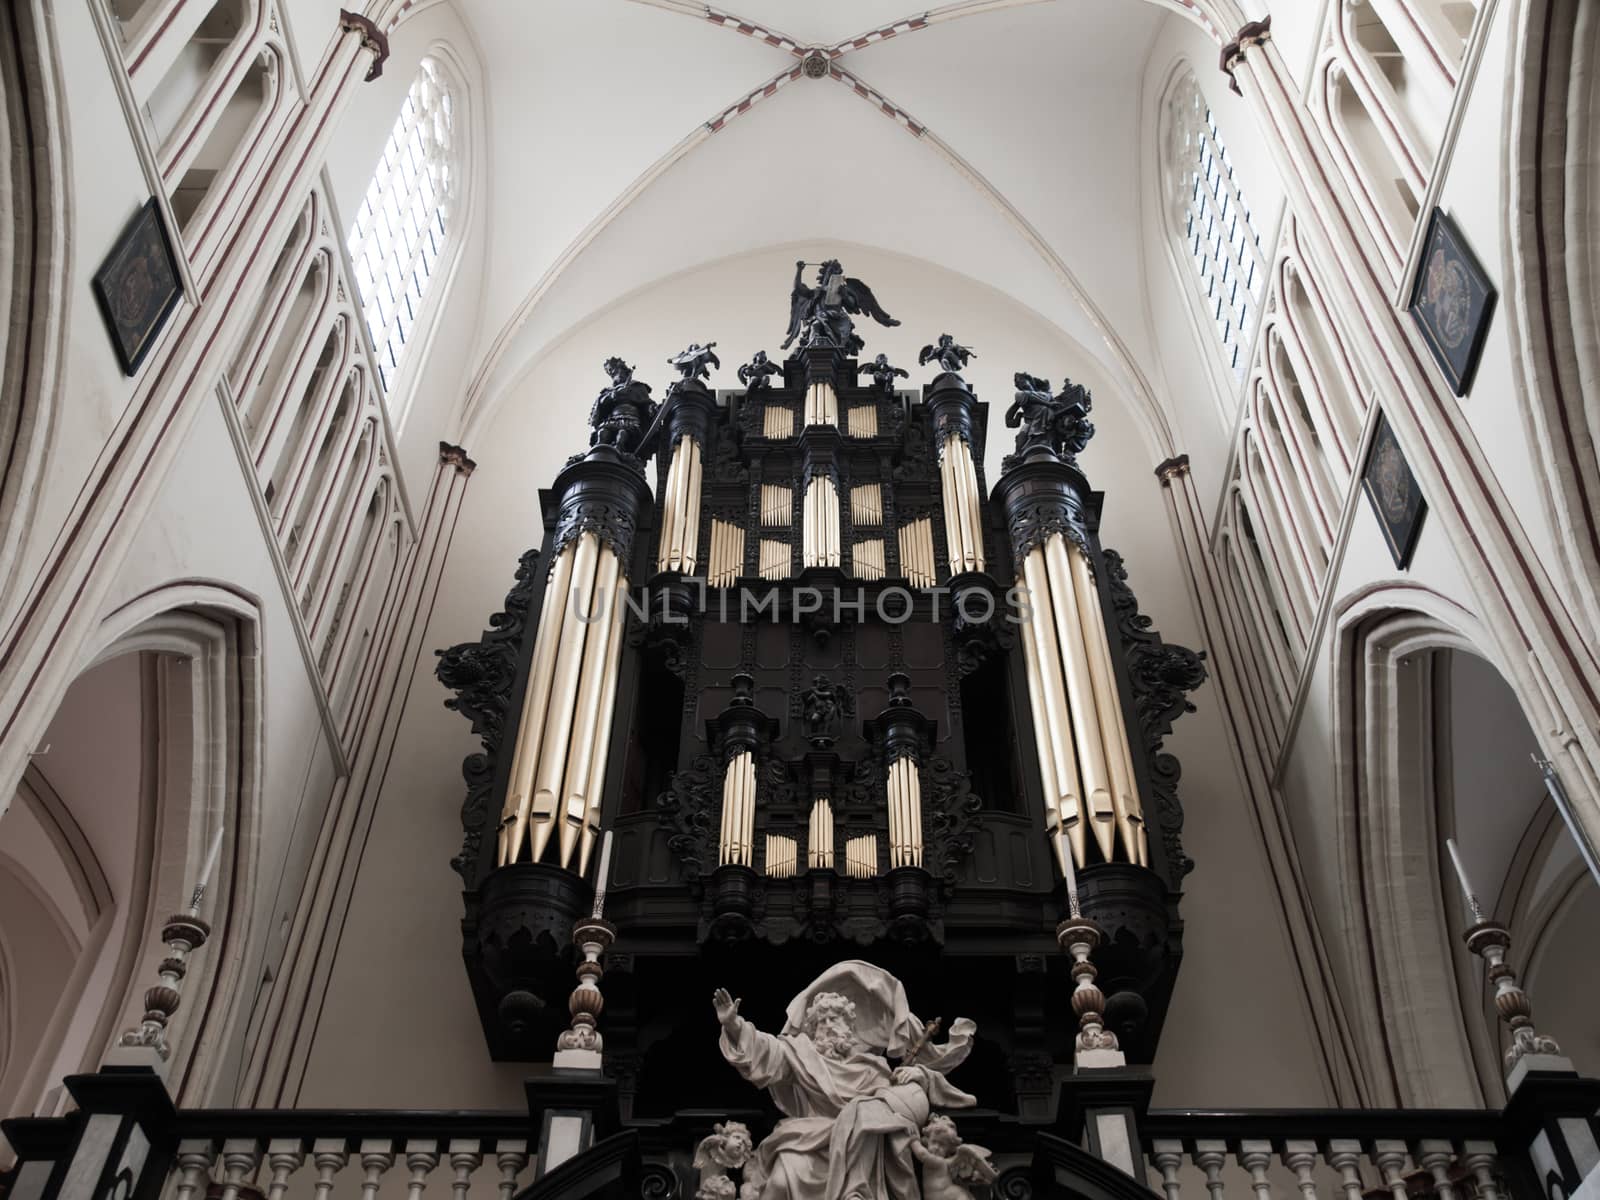 Black organ pipes in old white catholic church